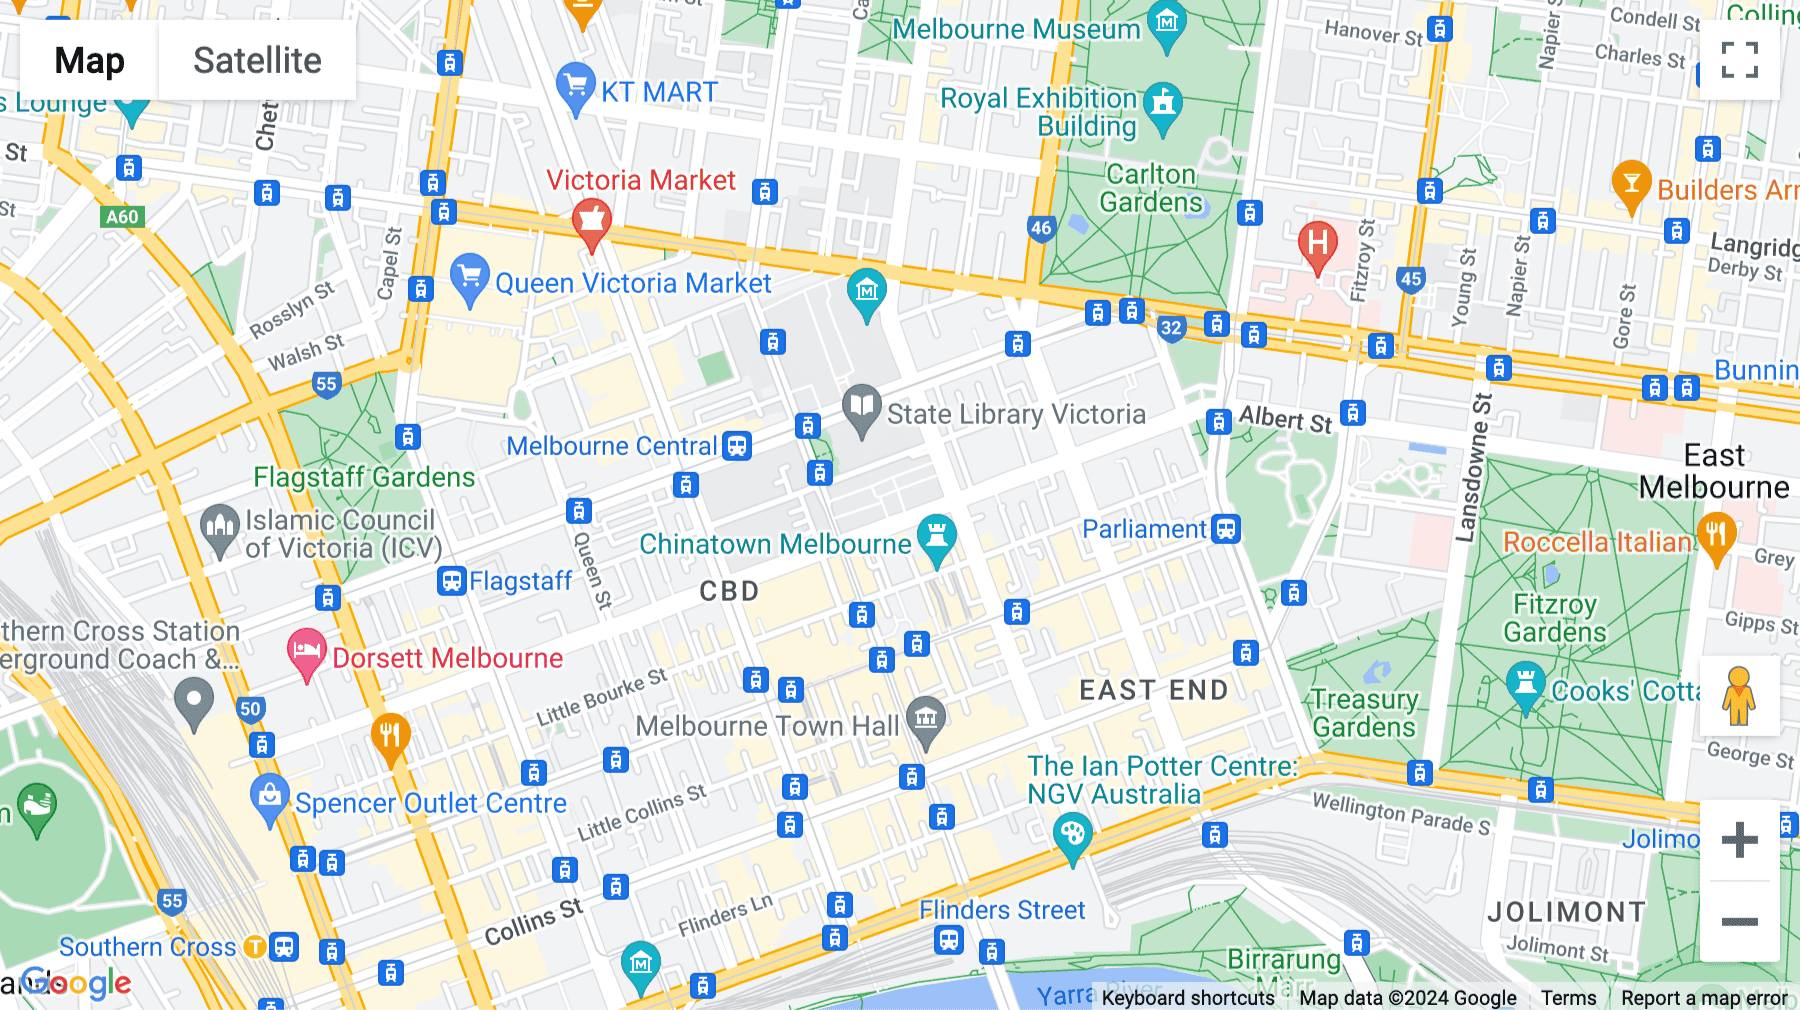 Click for interative map of 3 Albert Coates Lane, Melbourne